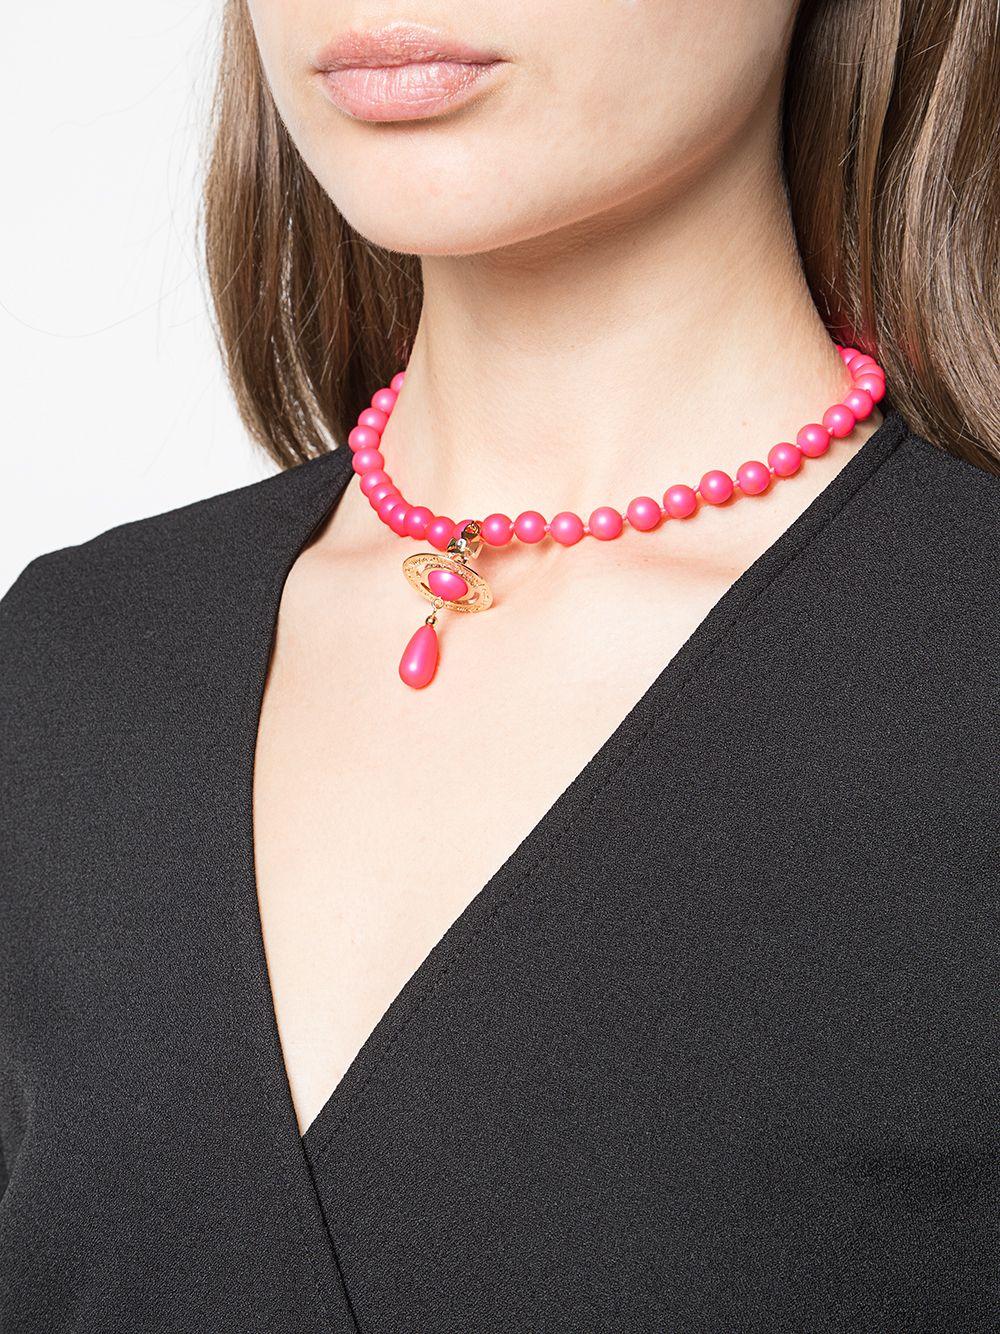 Vivienne Westwood Neon Pearl Choker Necklace in Pink | Lyst